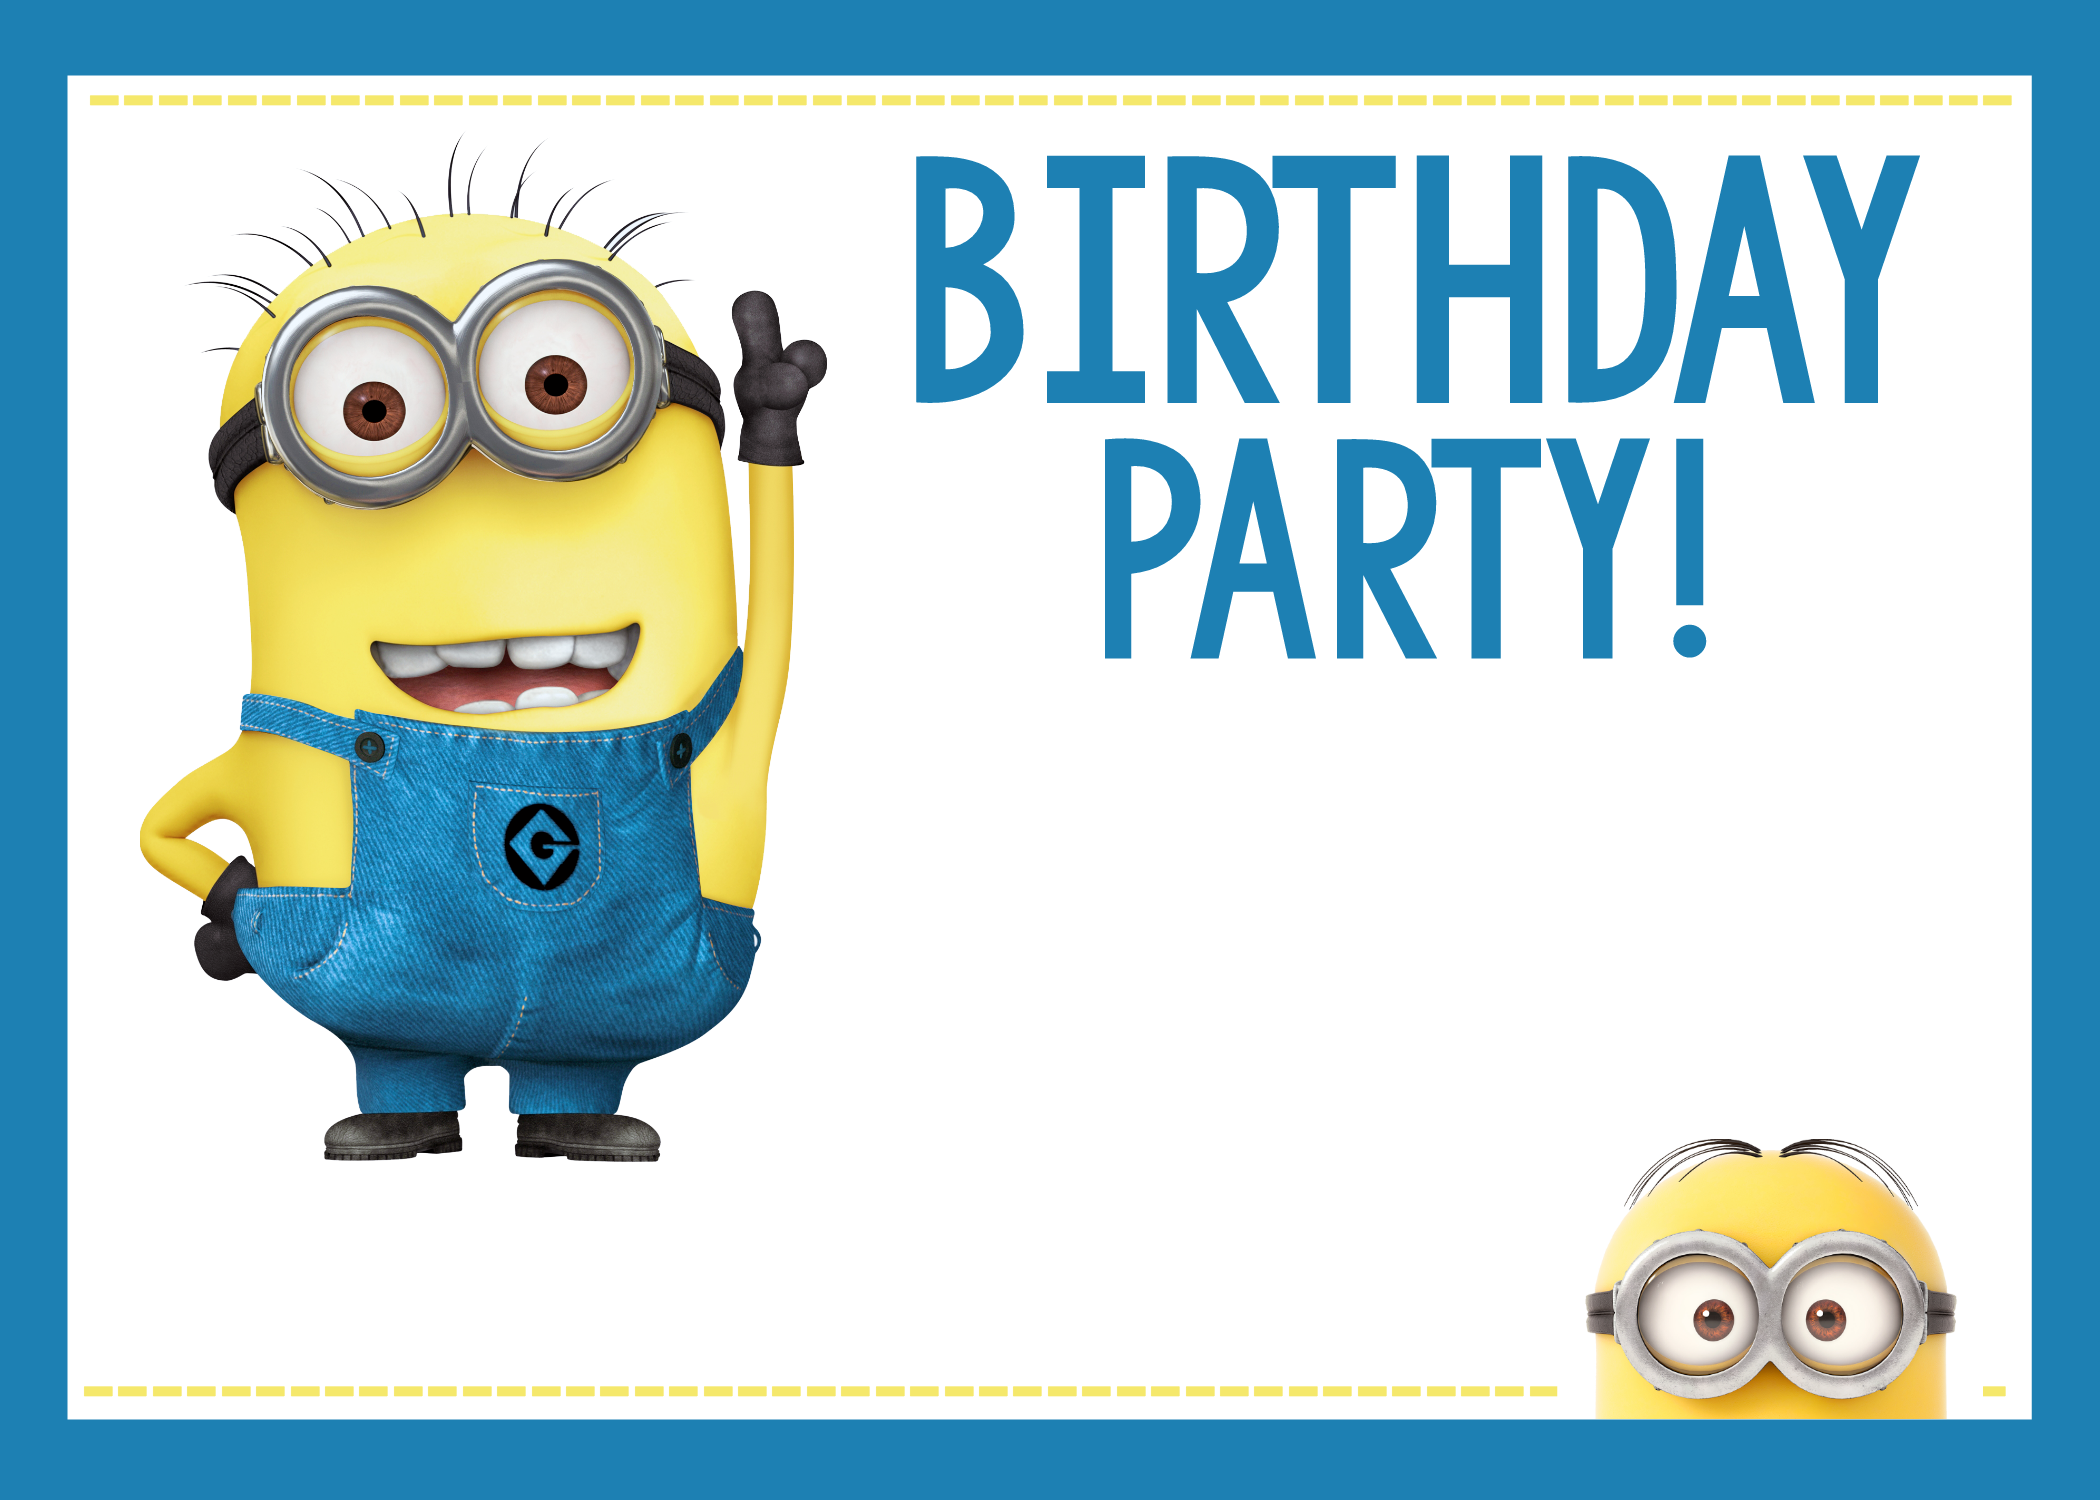 Fun Minion Party Ideas For A Birthday Fun Squared